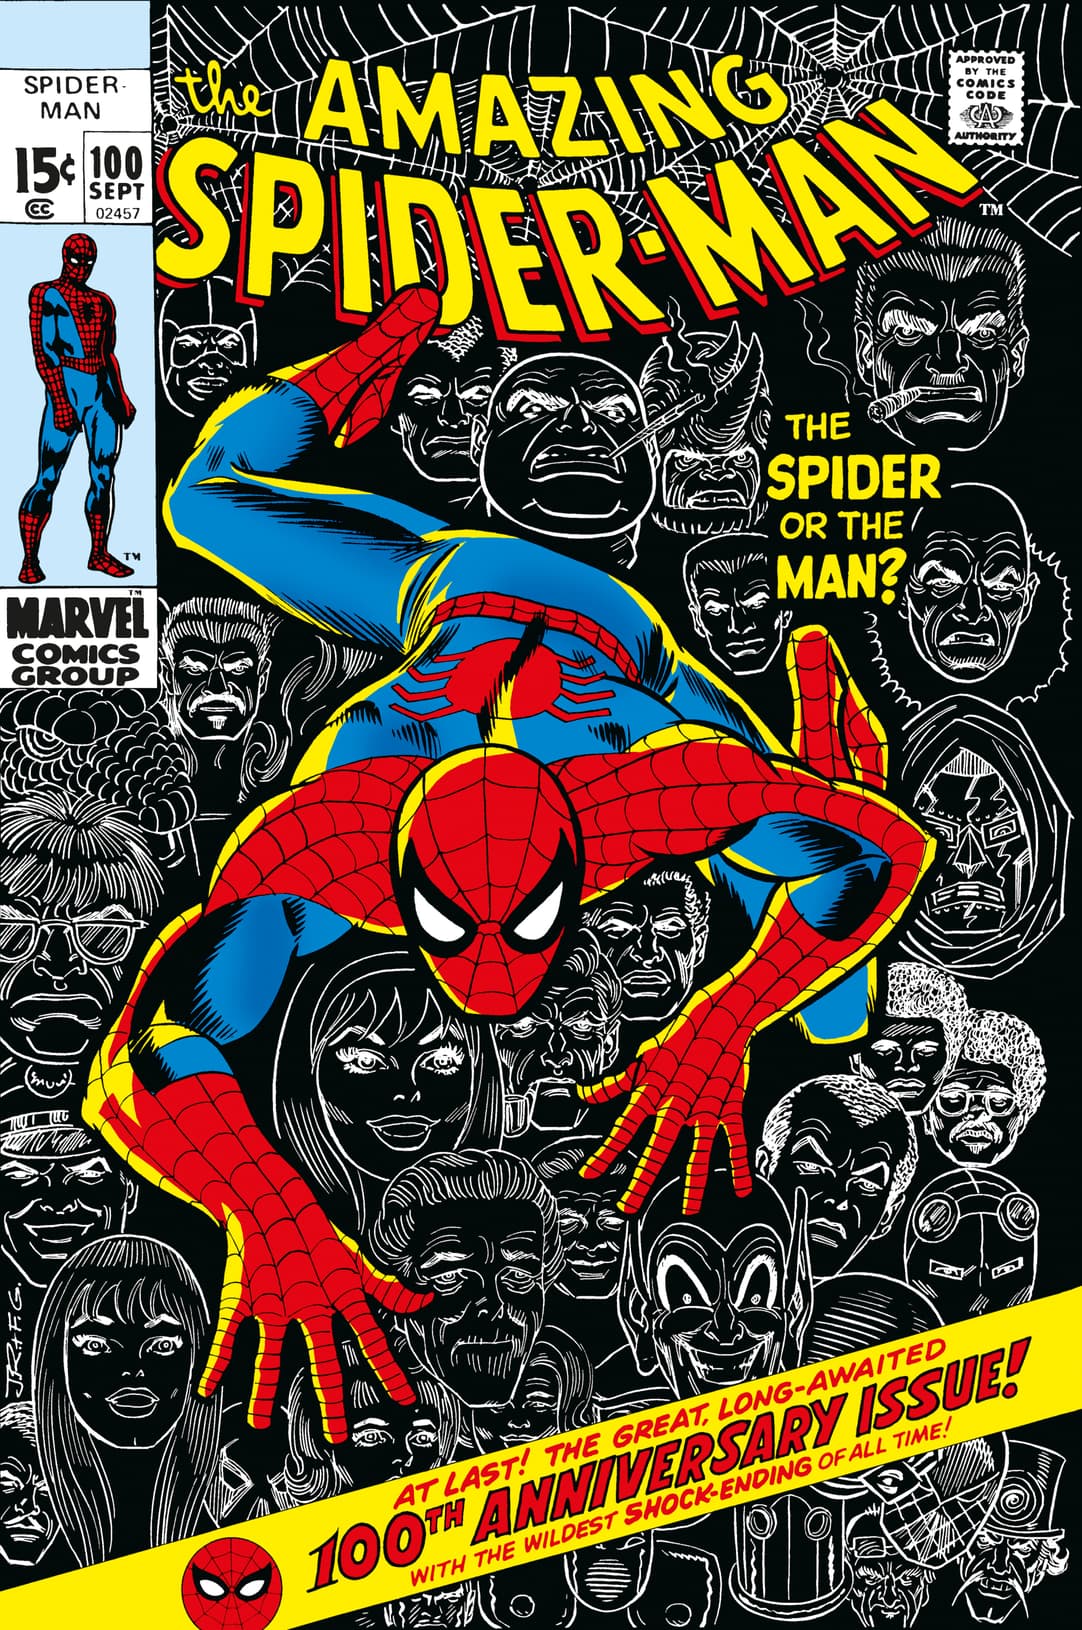 The Amazing Spider-Man vol. 1 #100